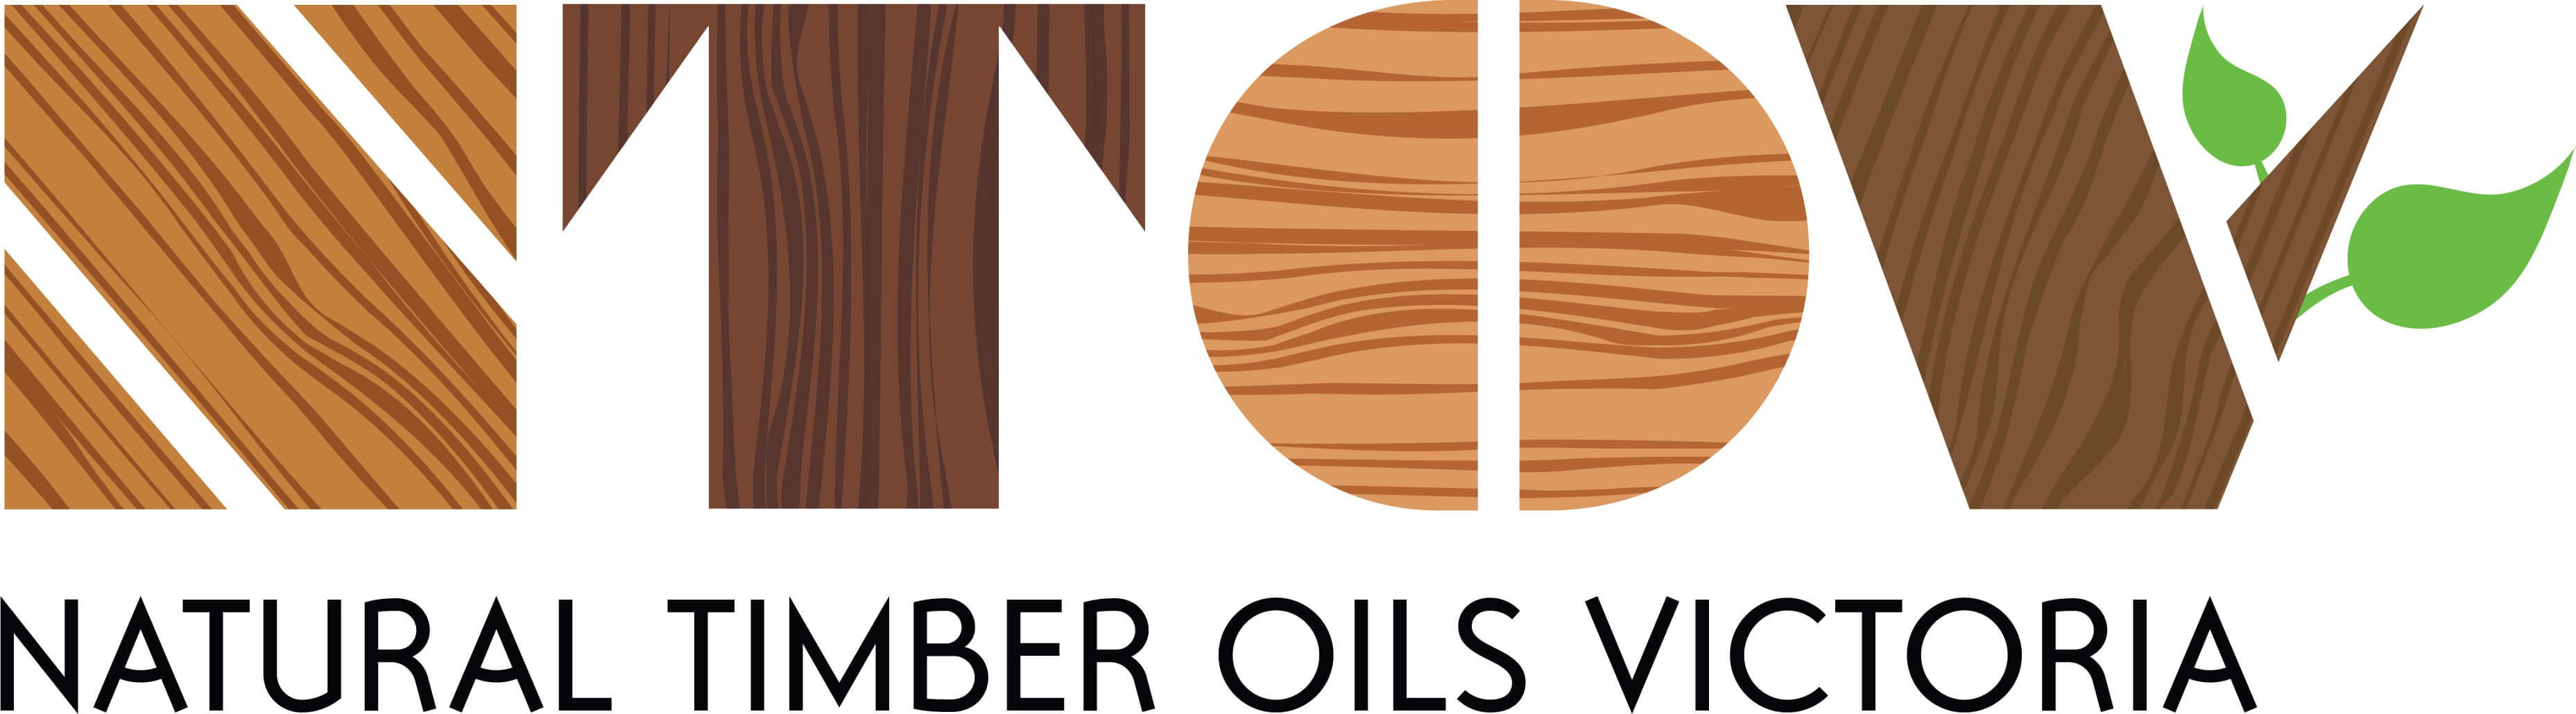 natural oils ltd logo